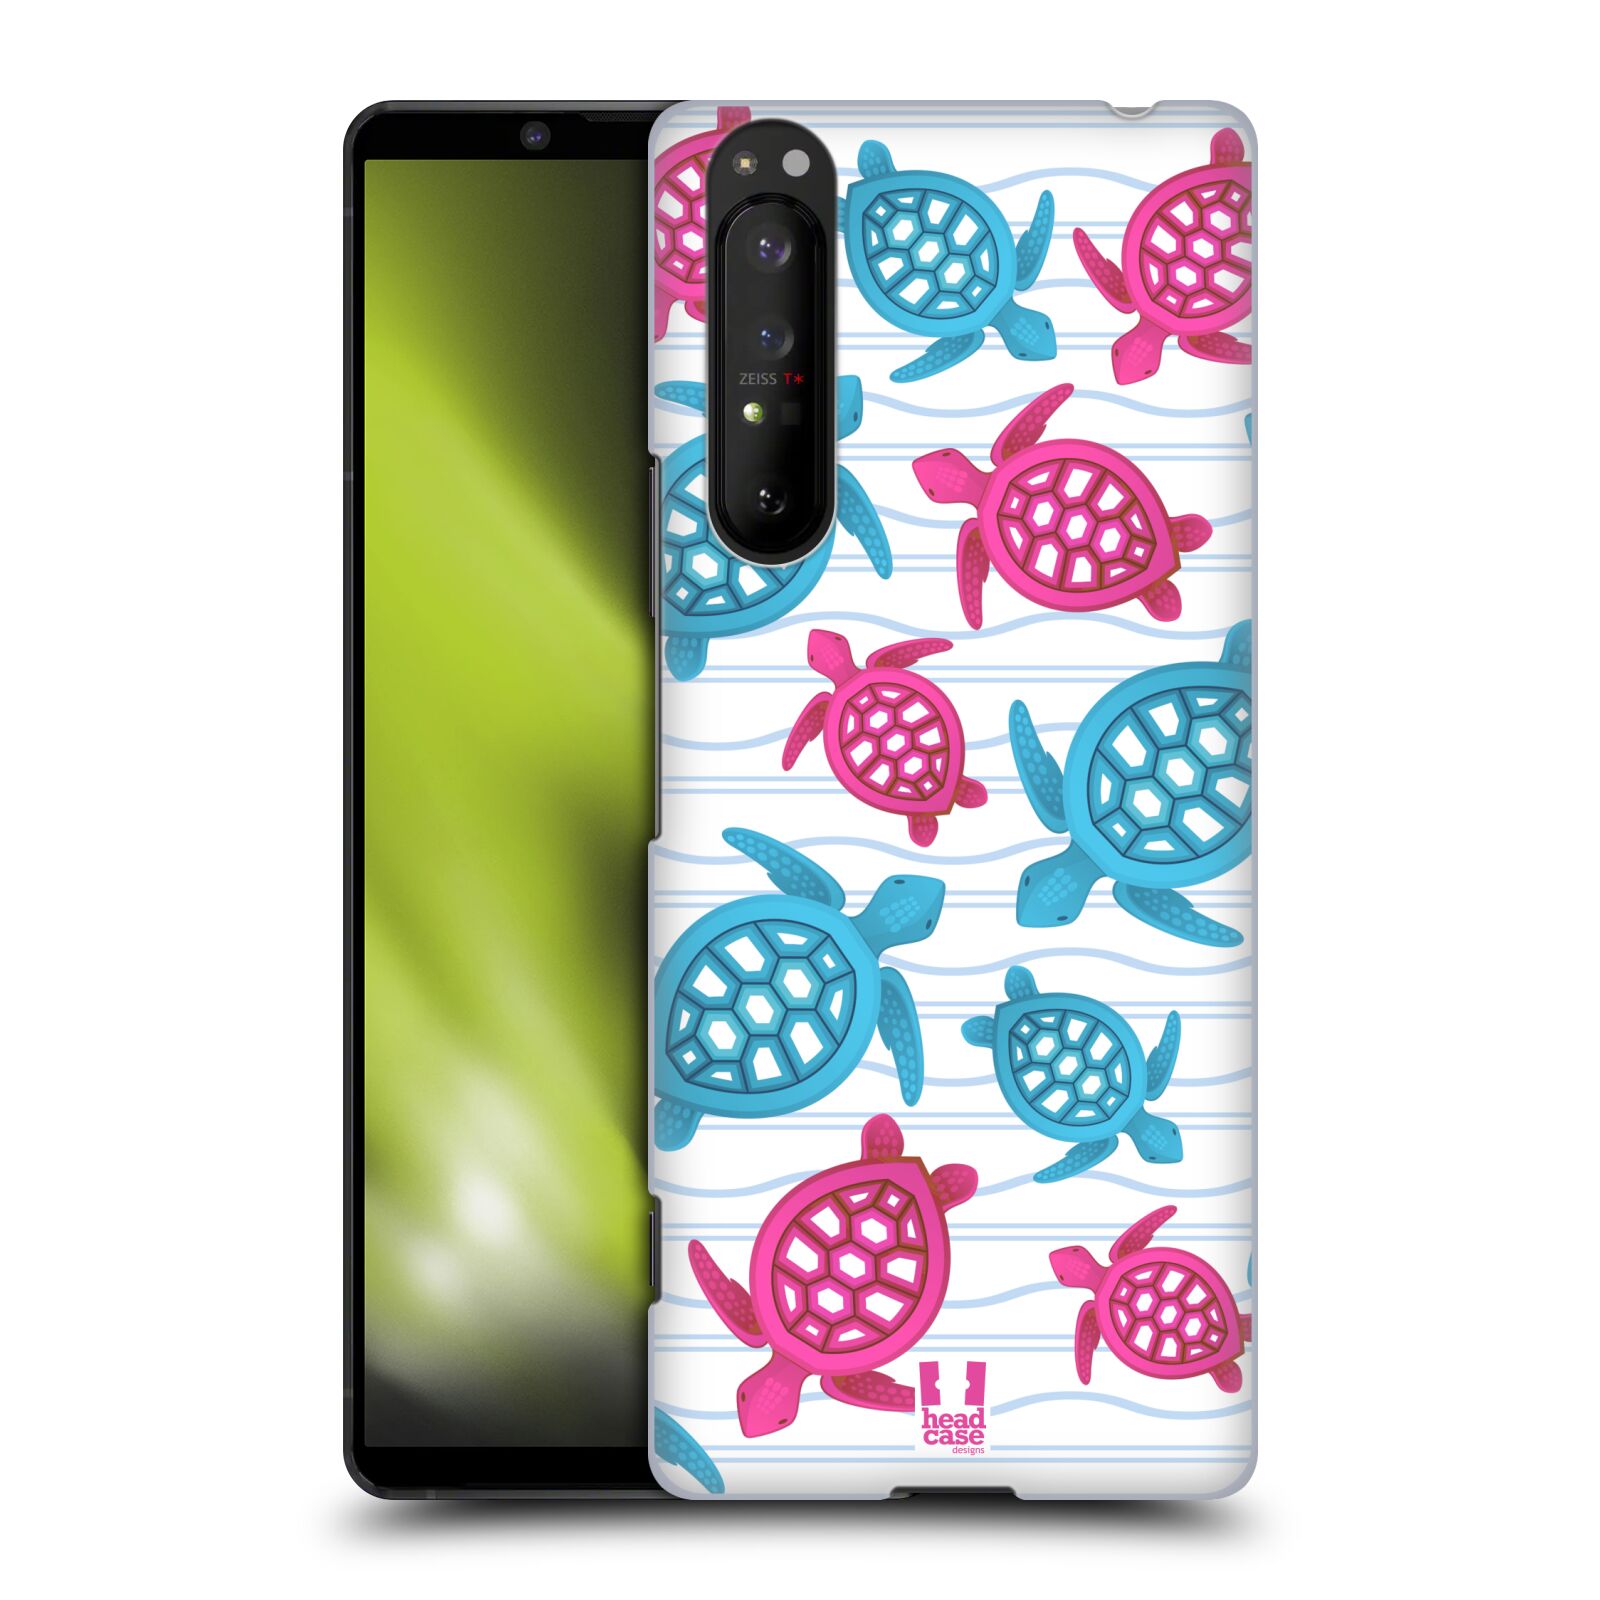 Zadní obal pro mobil Sony Xperia 1 II - HEAD CASE - kreslený mořský vzor želvičky